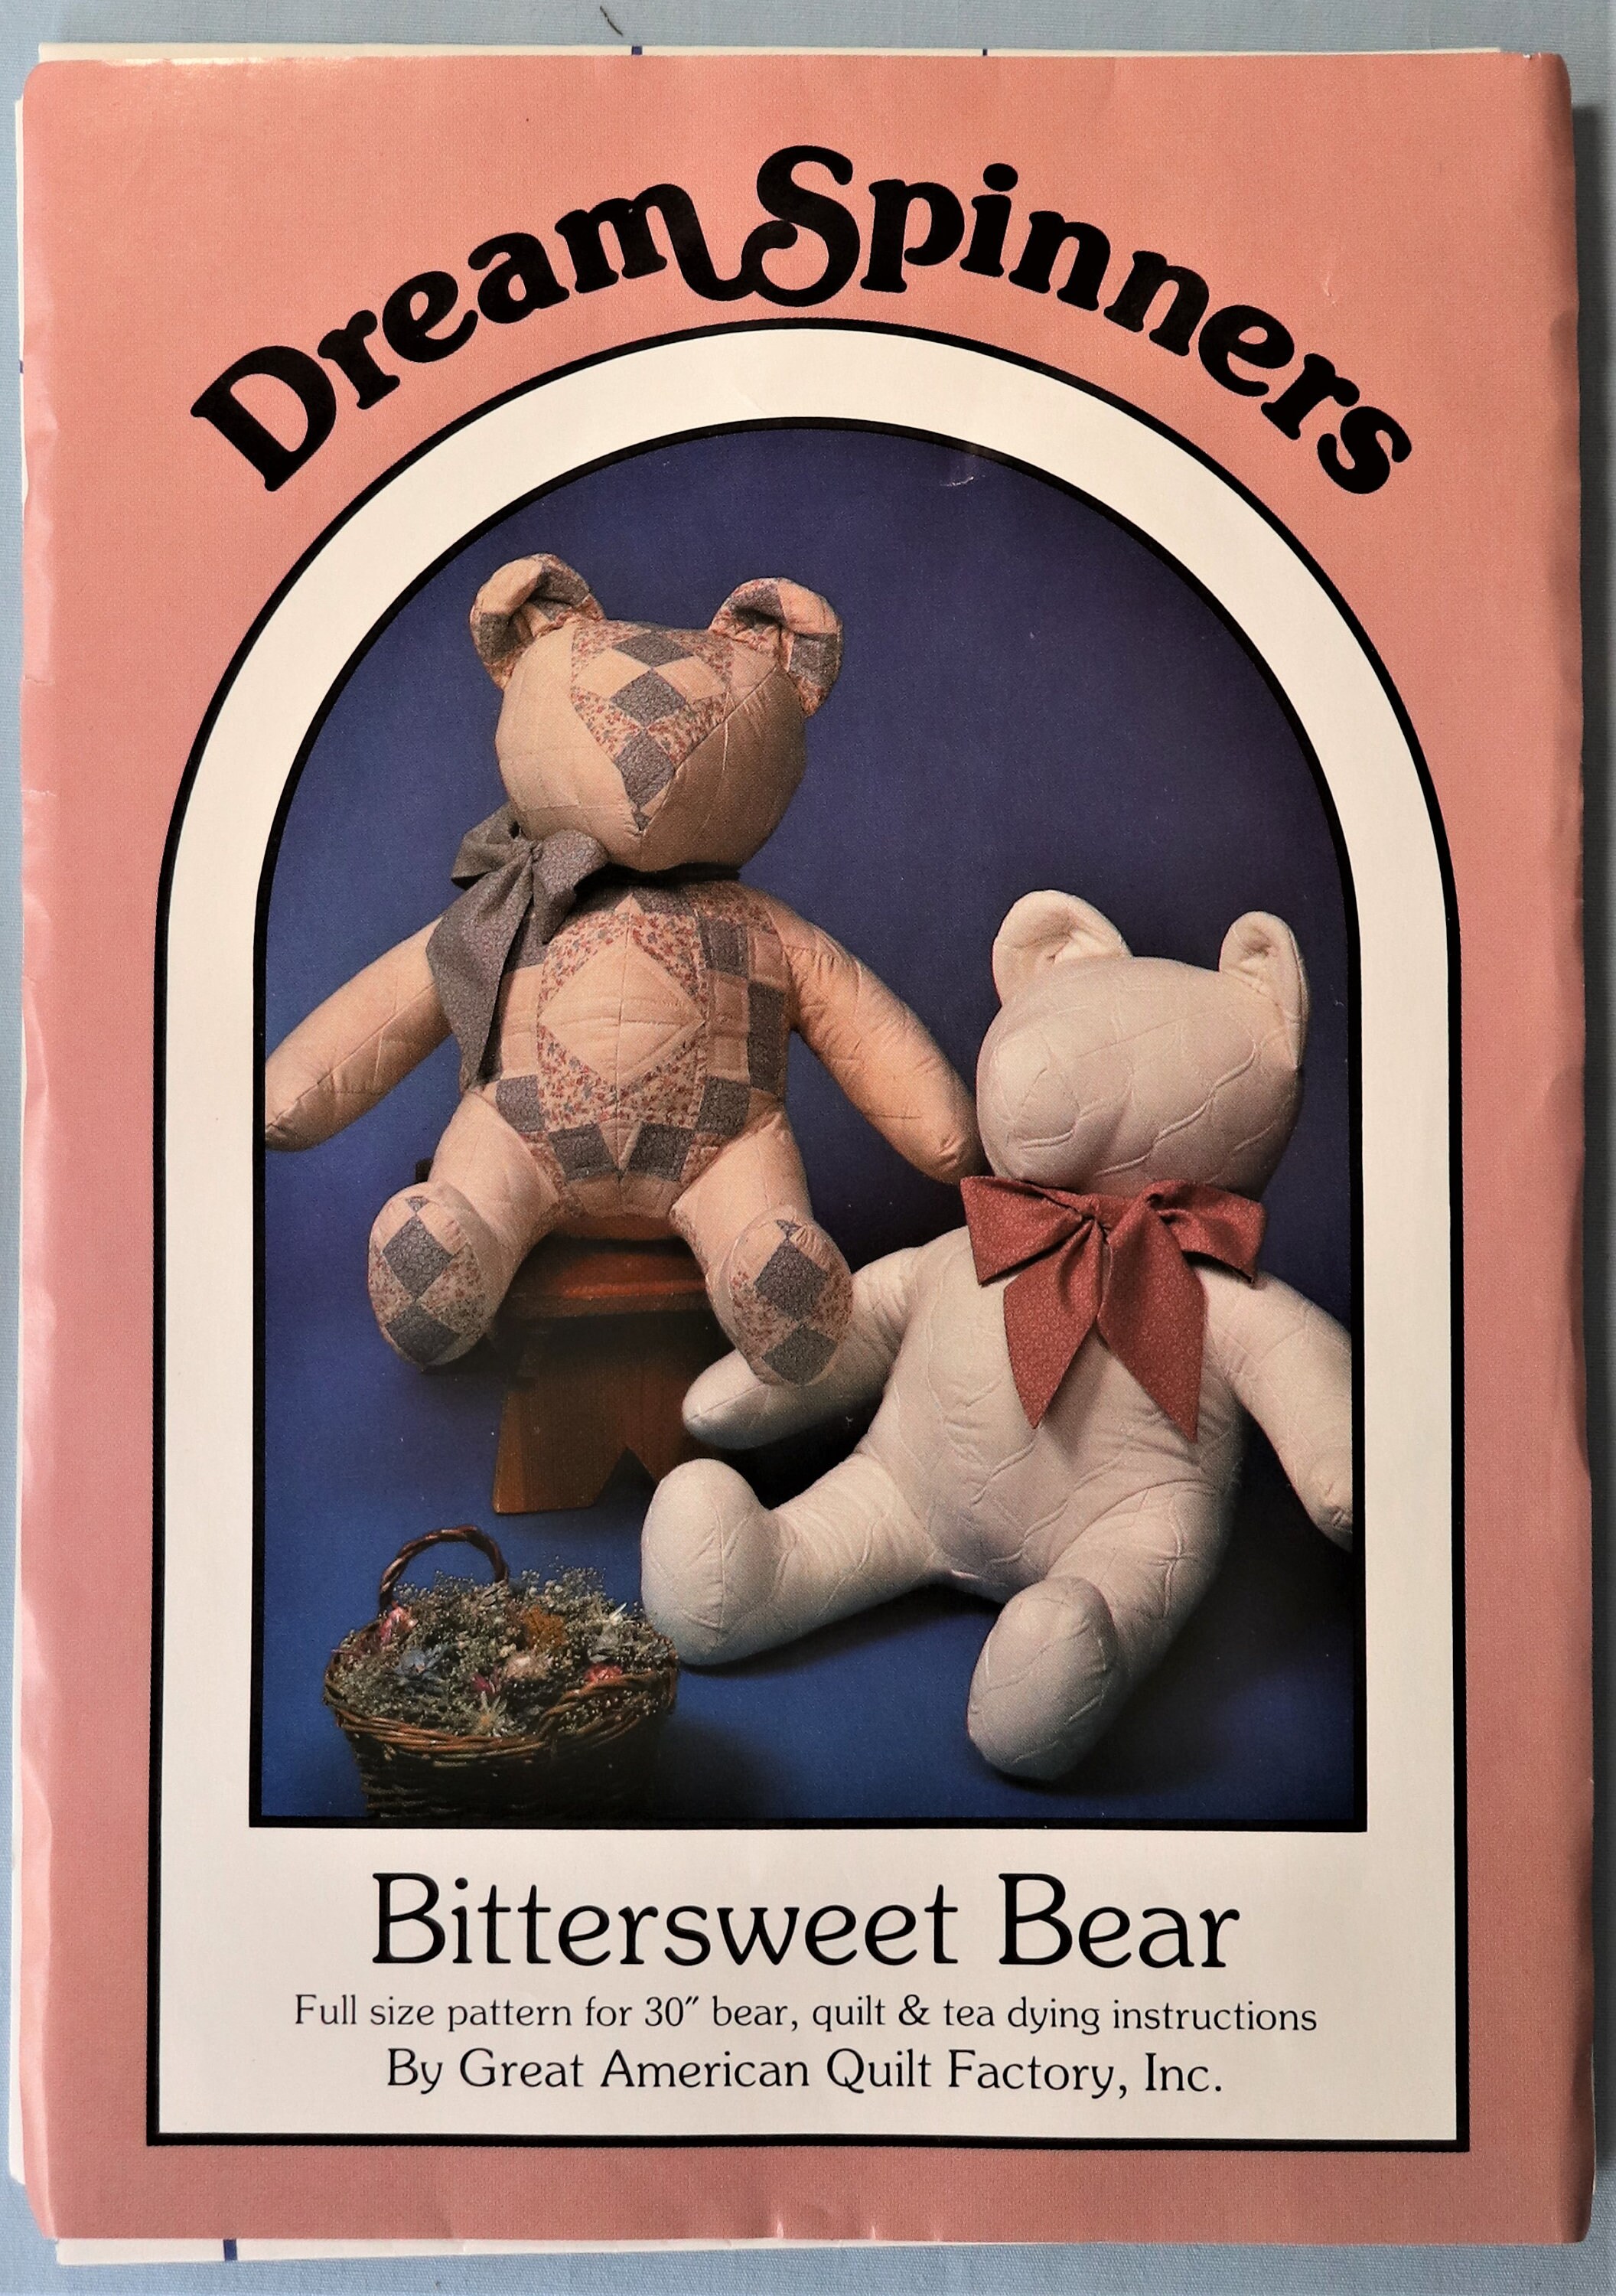 Memory Bear Pattern Make Teddy Bear Cuddly Toy Teddy Bear Sewing Pattern  Plushie Pattern 